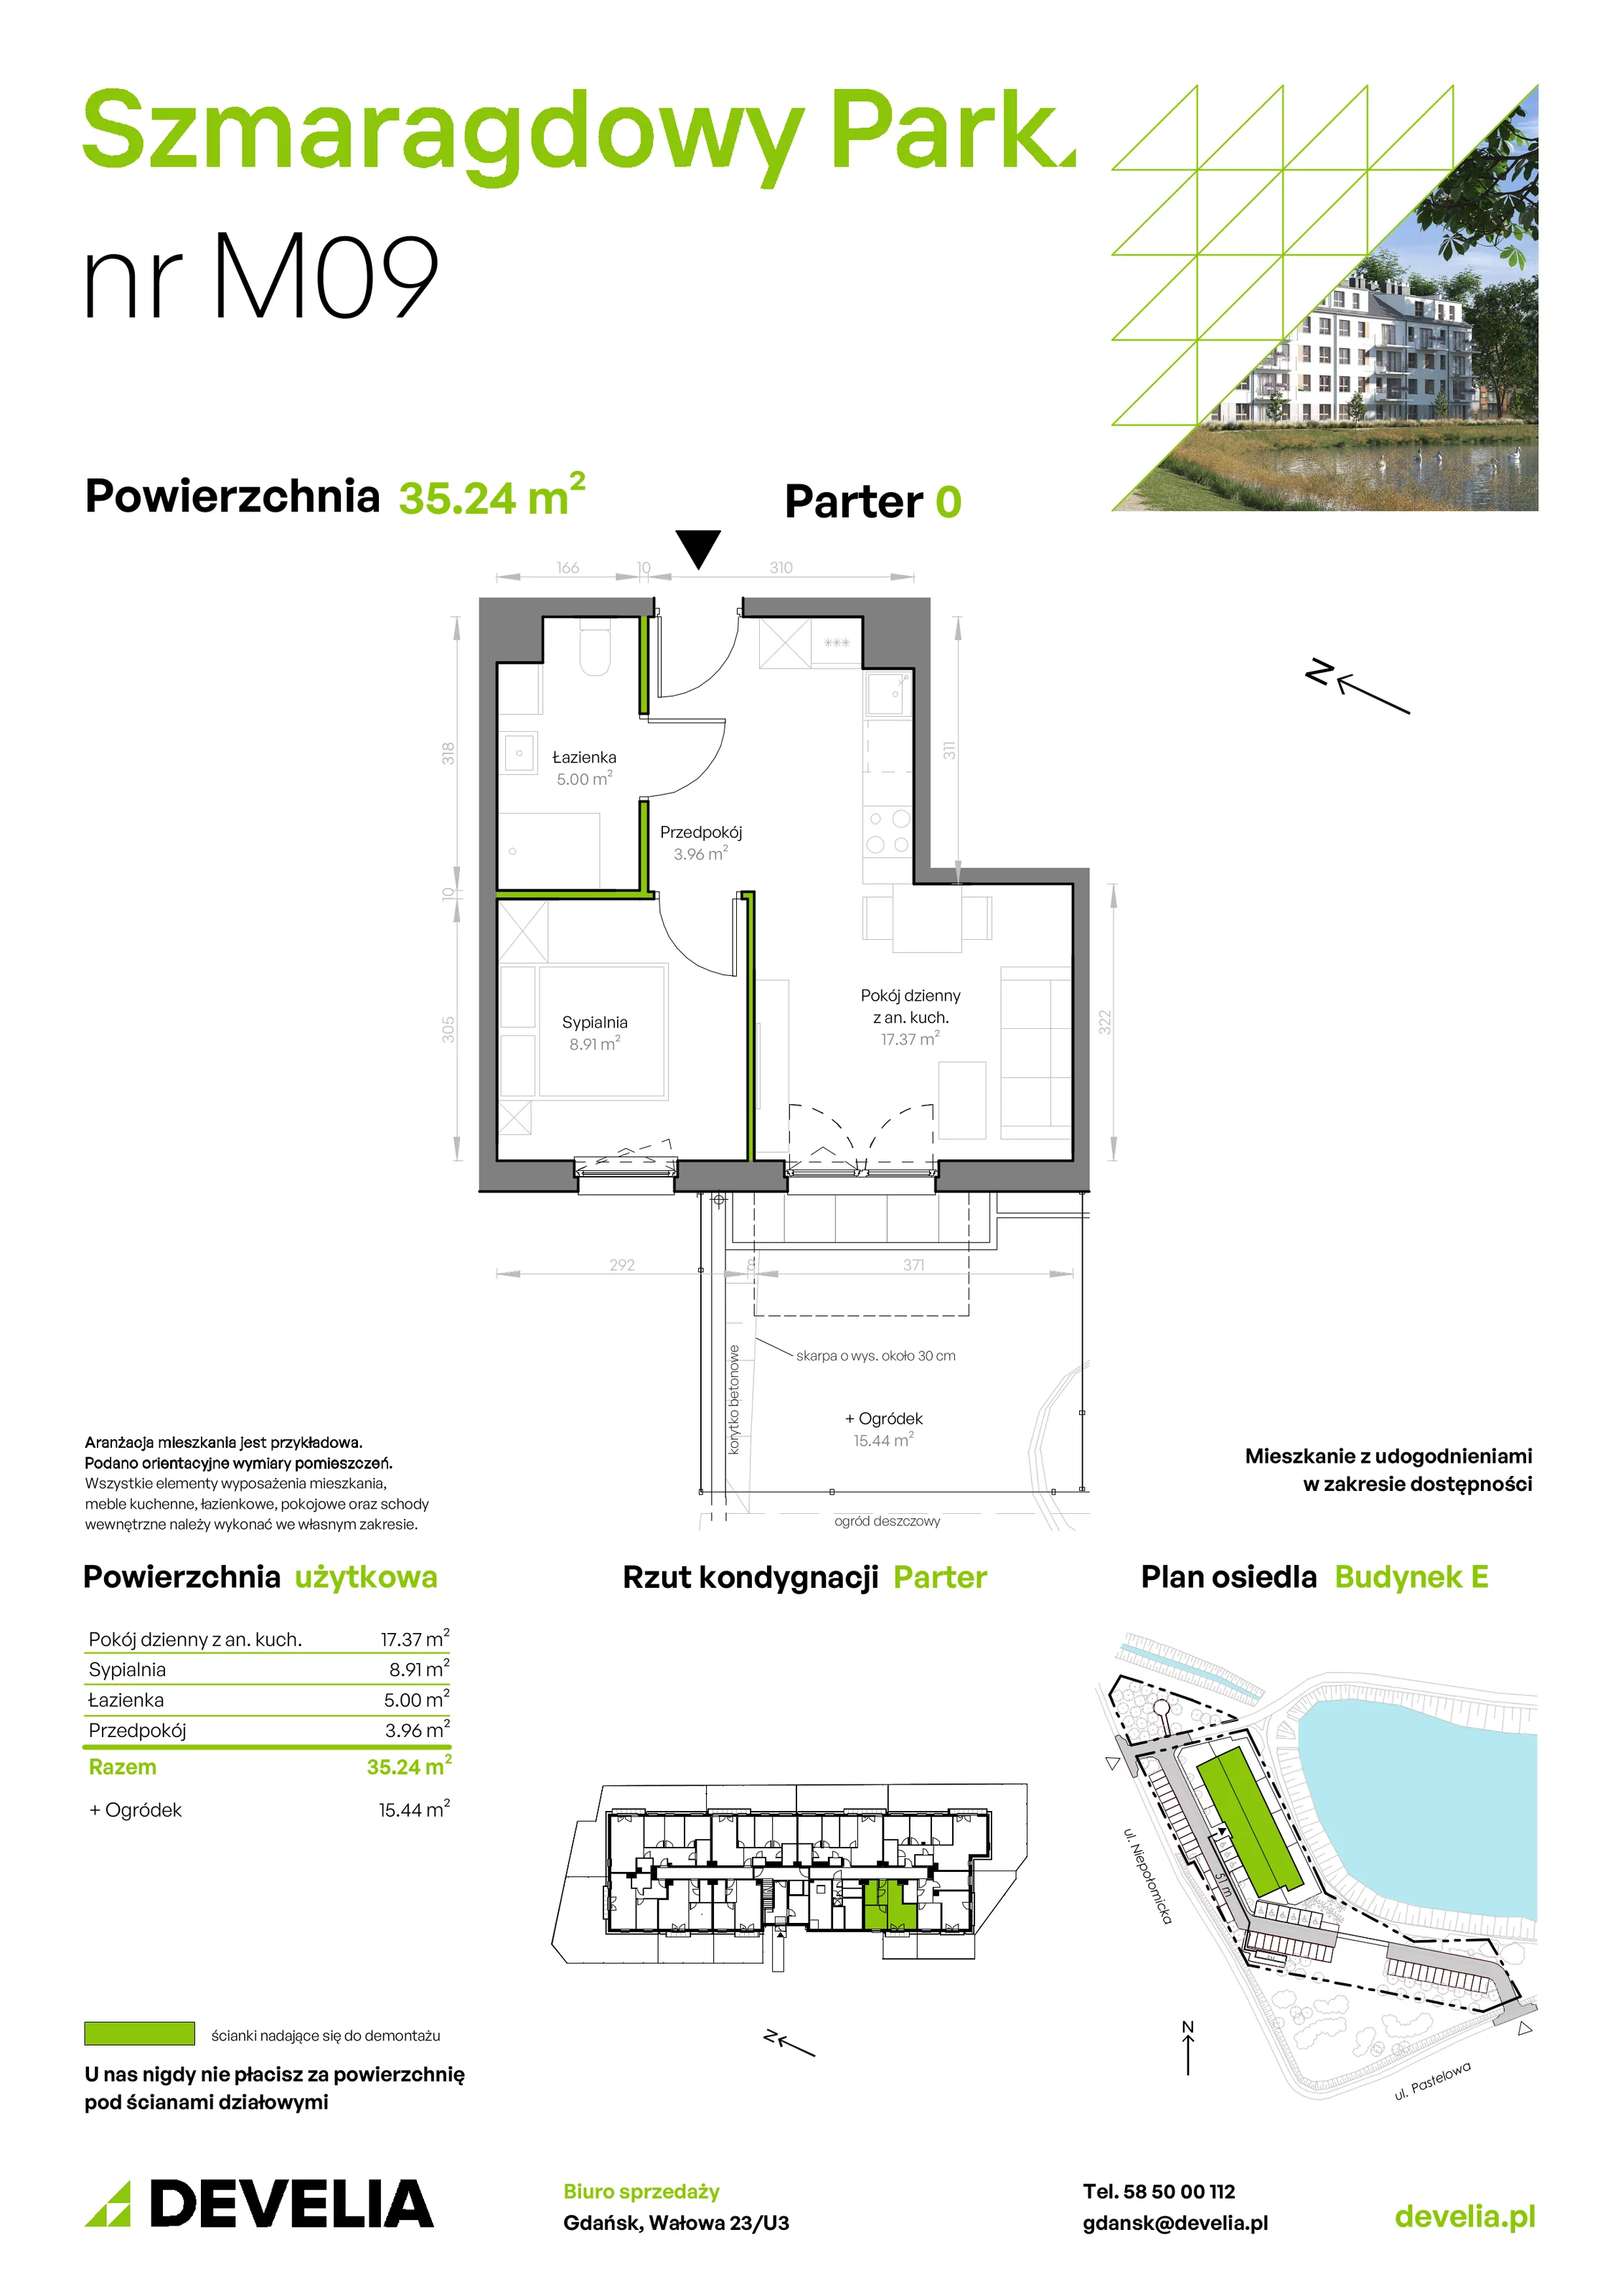 Mieszkanie 35,24 m², parter, oferta nr E/009, Szmaragdowy Park, Gdańsk, Orunia Górna-Gdańsk Południe, Łostowice, ul. Topazowa 2